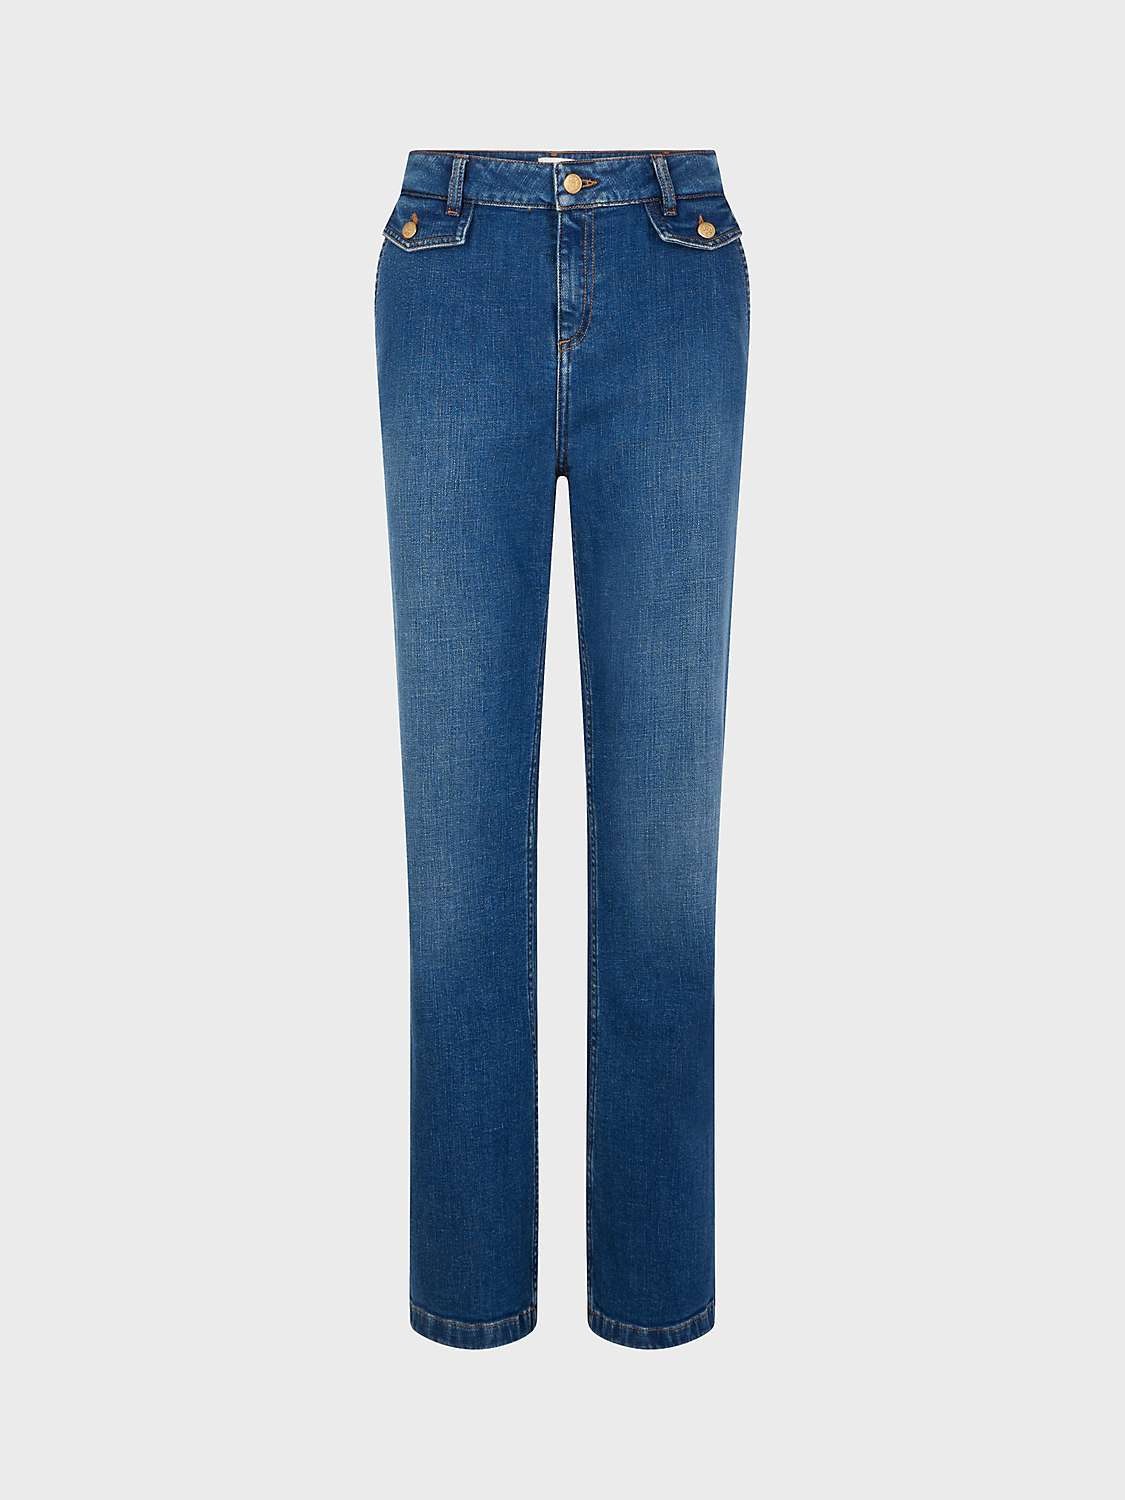 Buy Gerard Darel Camy Jeans, Blue Online at johnlewis.com